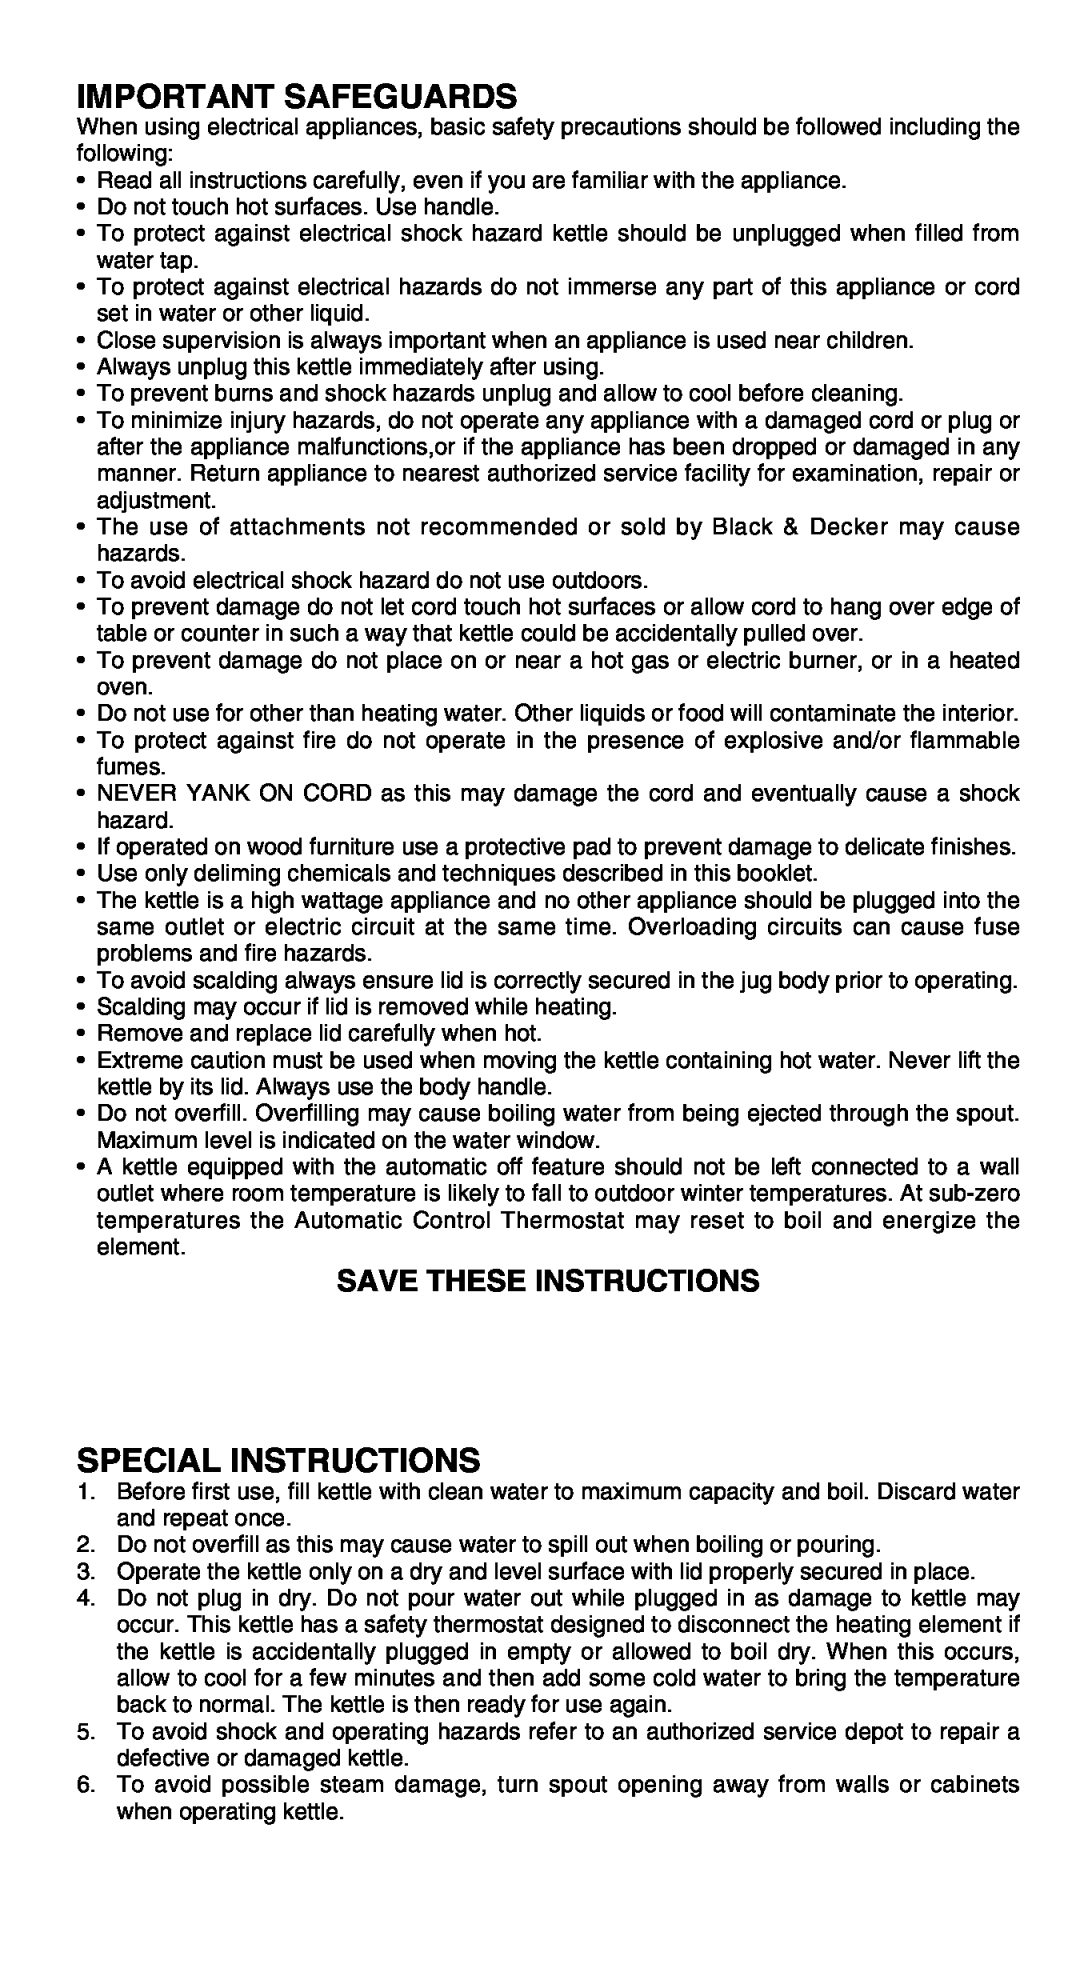 Black & Decker JK200, JKA300, JKA350 warranty Important Safeguards, Special Instructions, Save These Instructions 